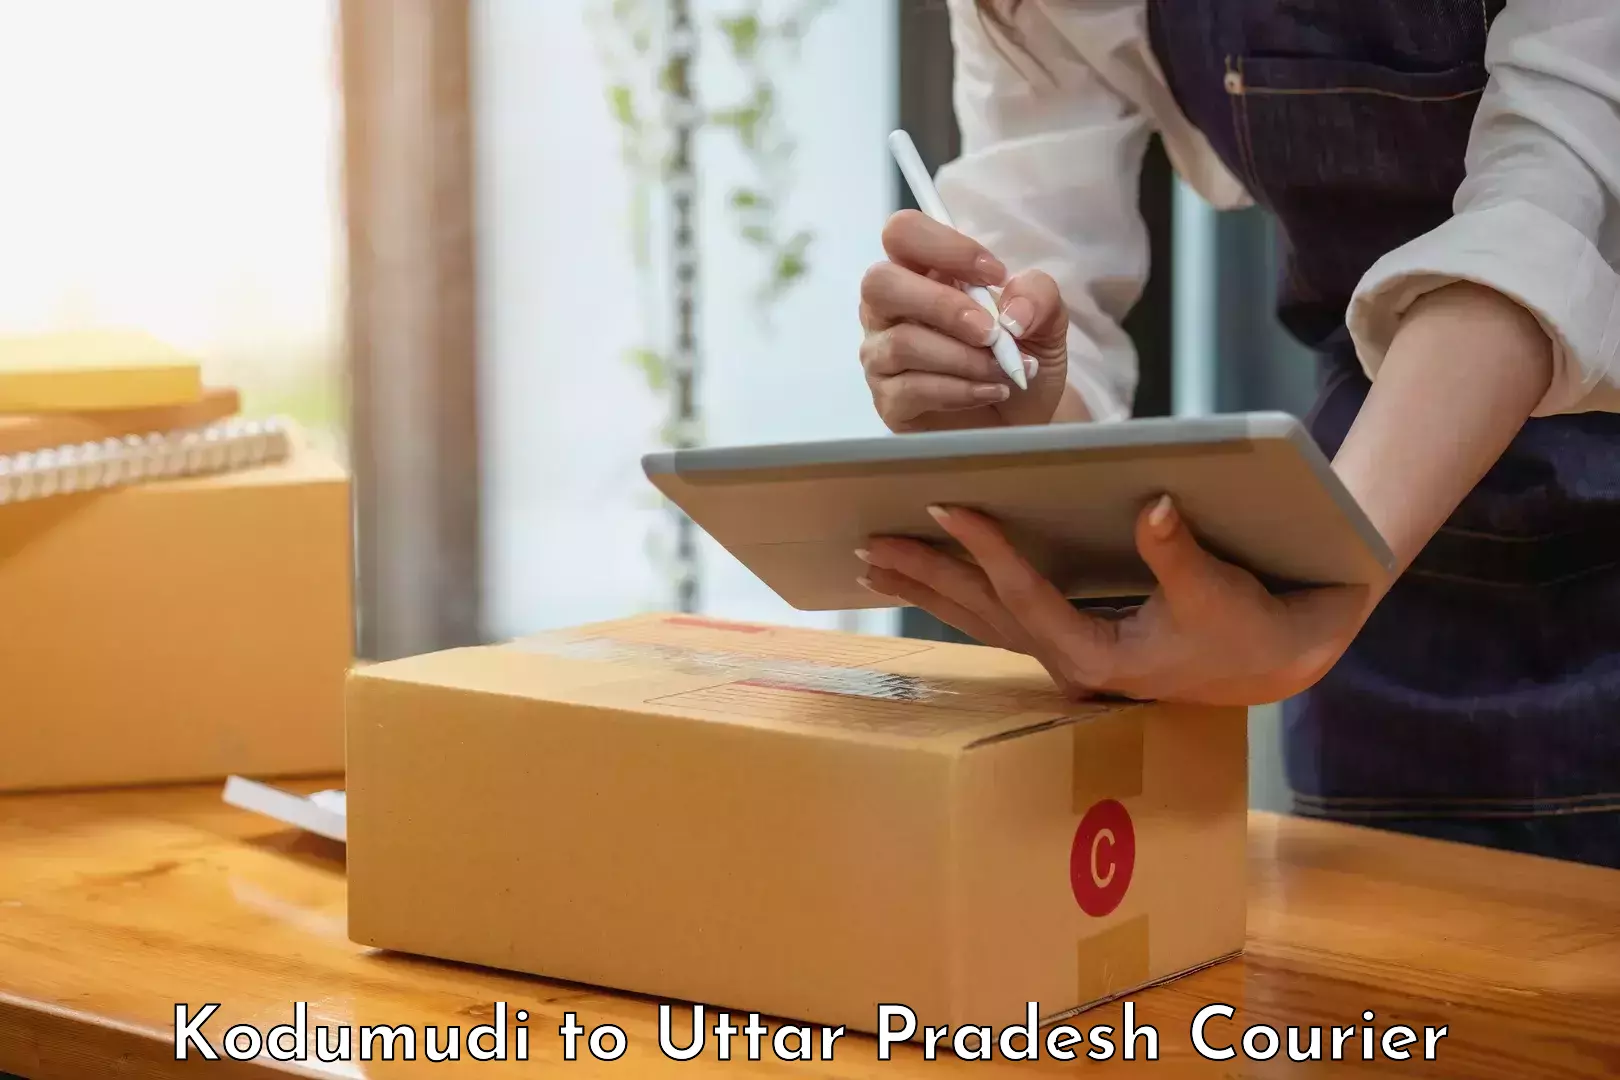 Professional courier handling Kodumudi to Sahatwar